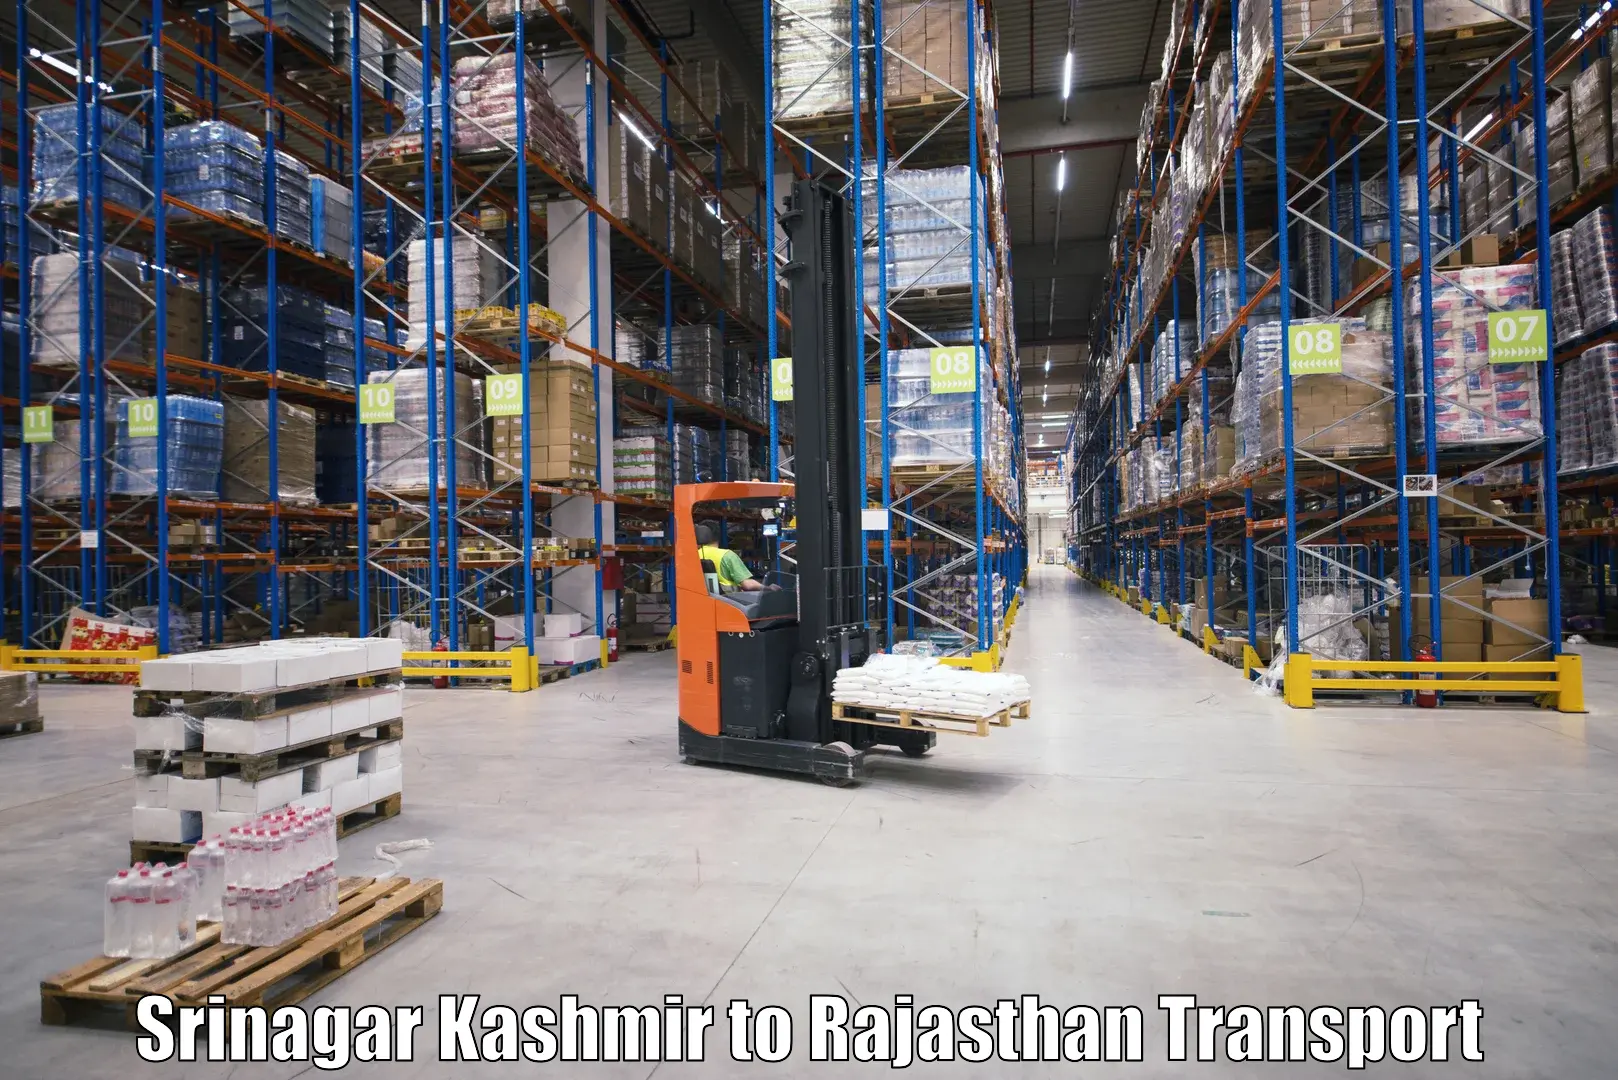 Goods delivery service Srinagar Kashmir to Banswara